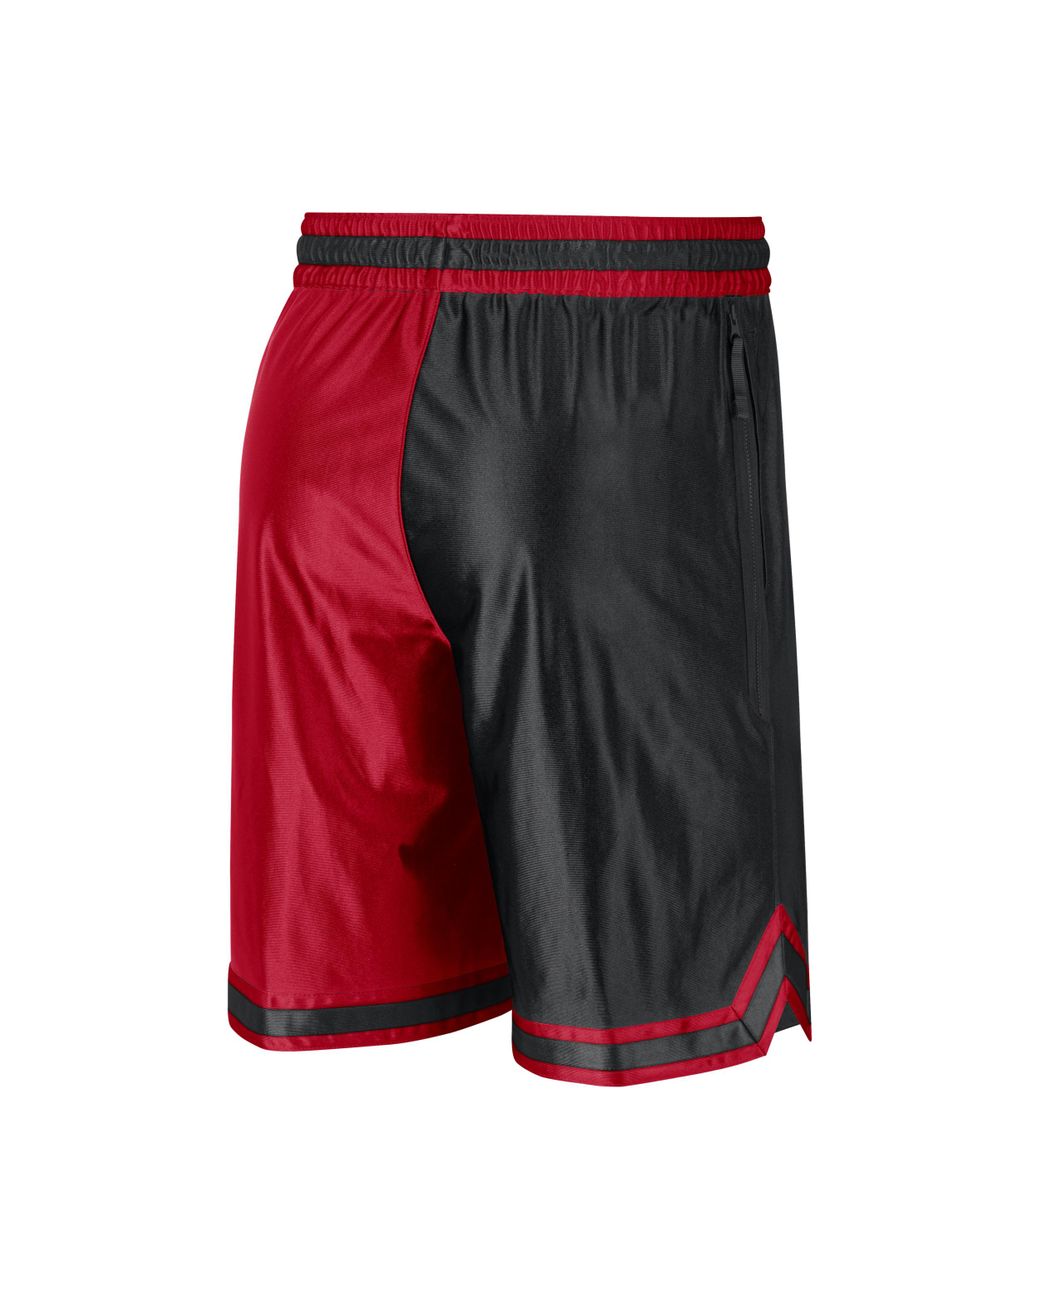 Nike Chicago Bulls Showtime Dri-FIT NBA Full-Zip Hoodie Red